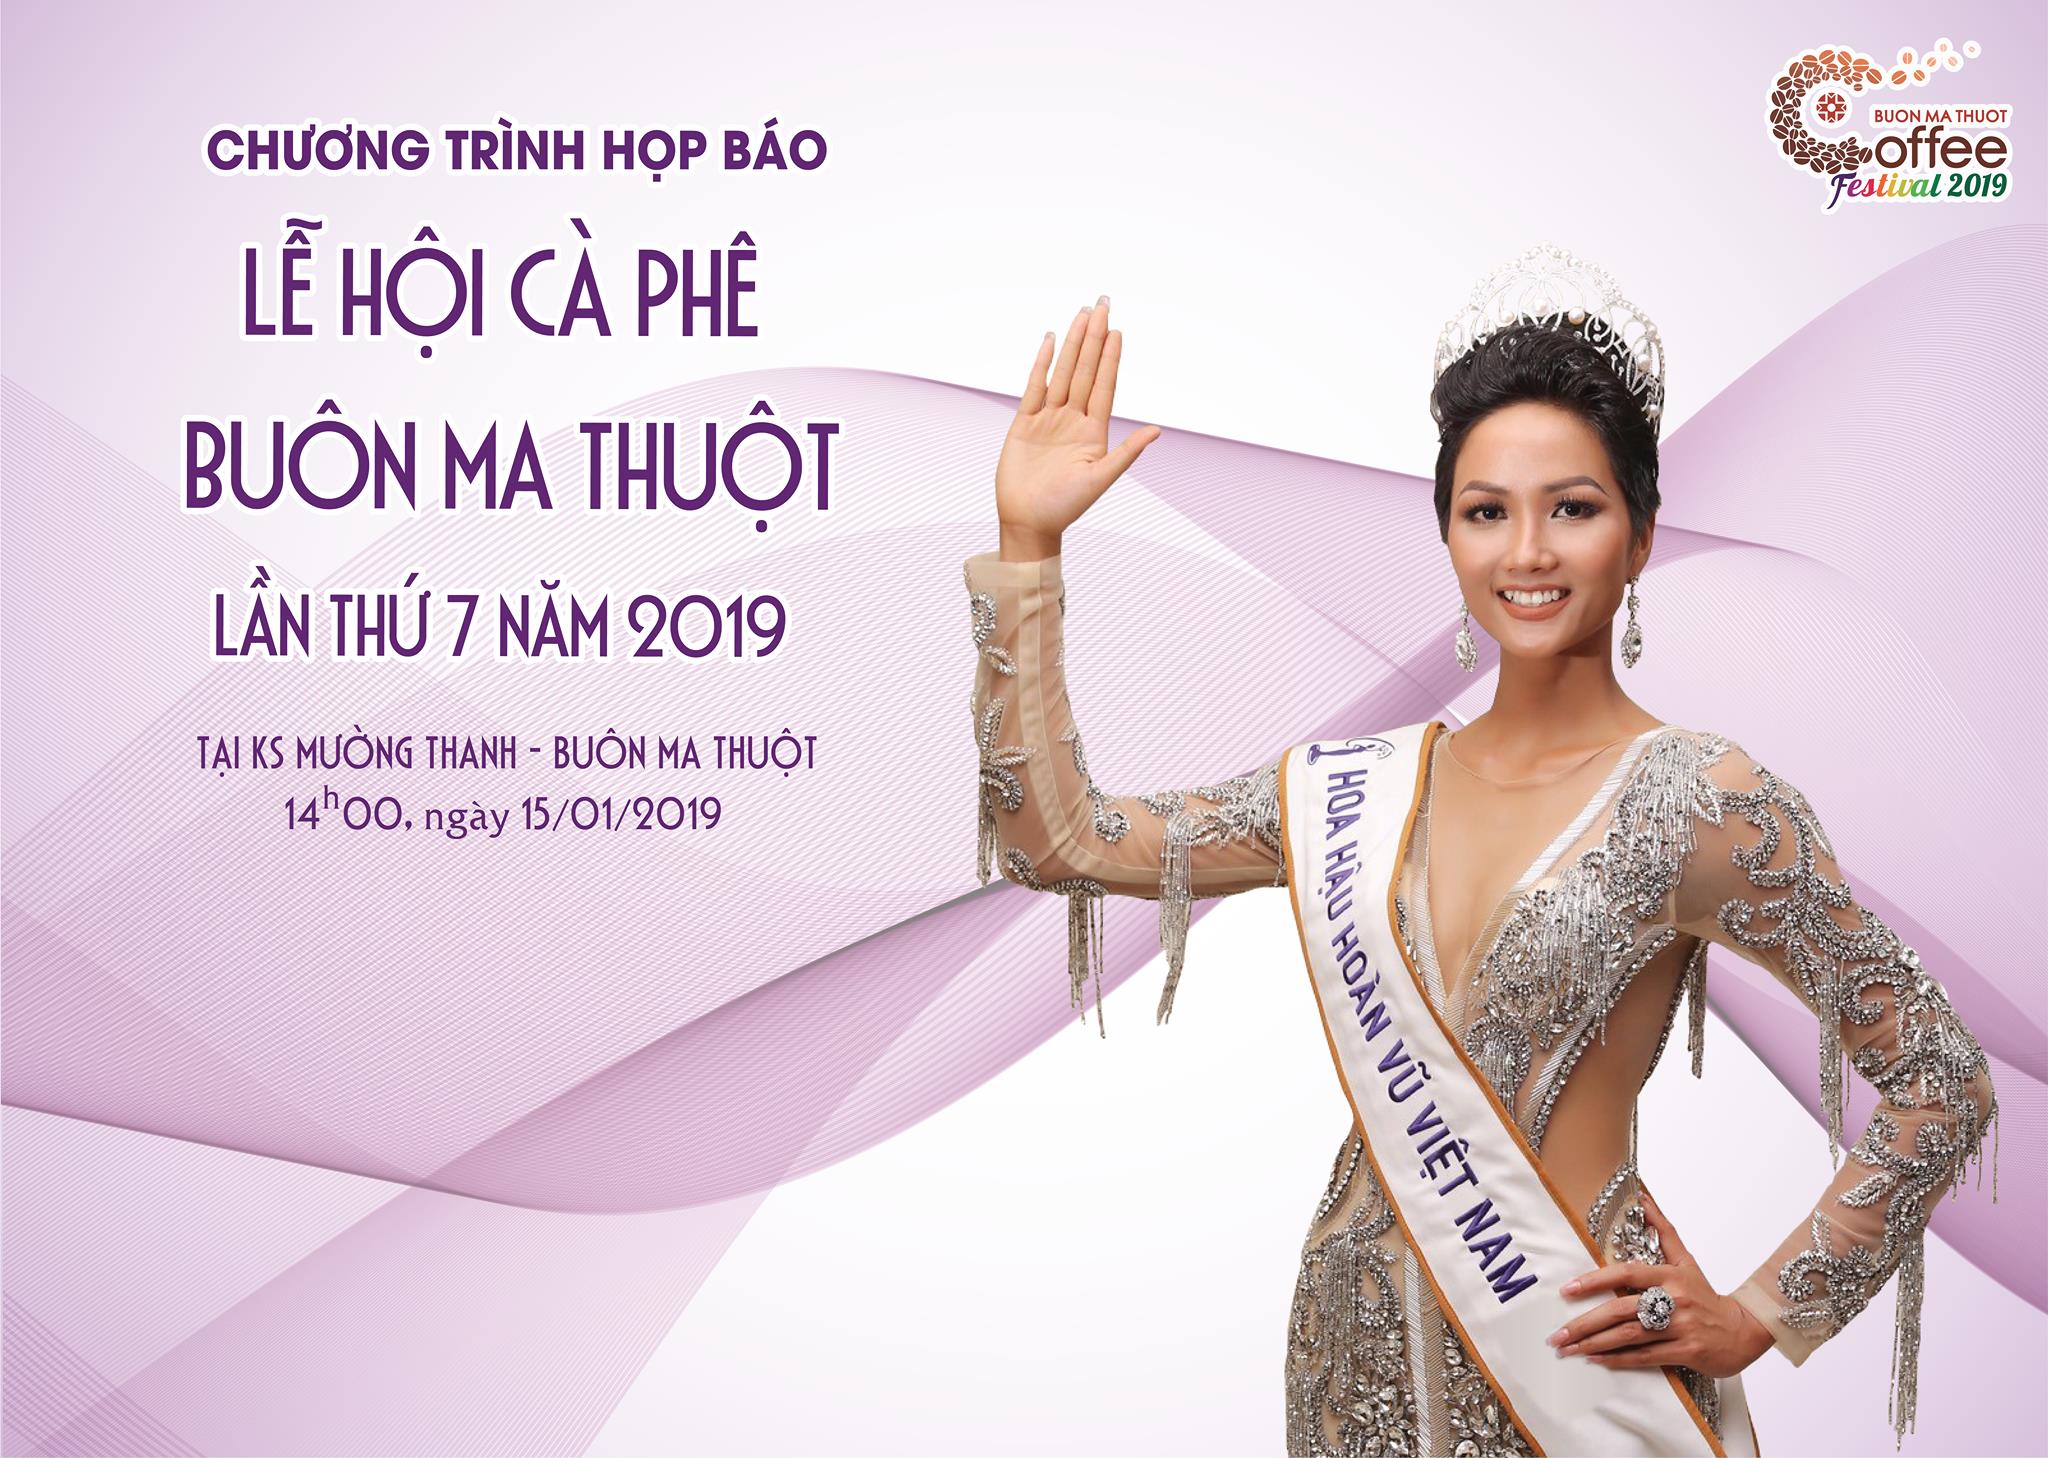 PRESS RELEASE  On the 7th Buon Ma Thuot Coffee Festival, 2019